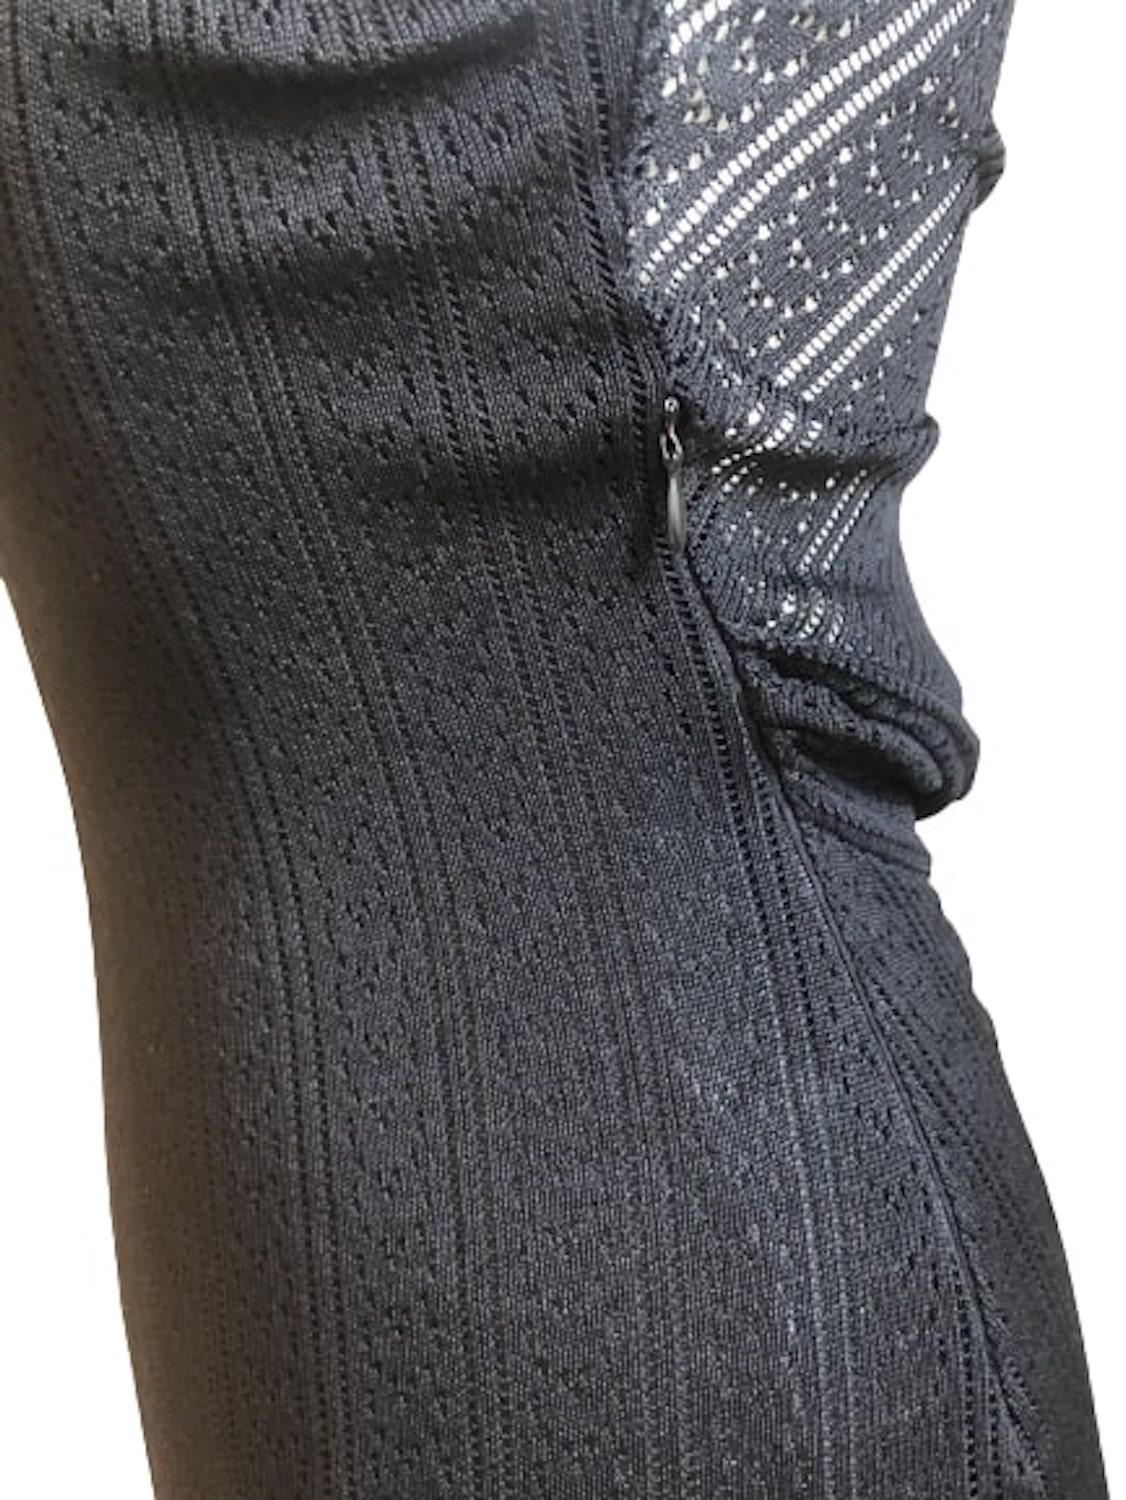 JOHN GALLIANO - Robe de soirée en dentelle noire tricotée, longueur moyenne, circa 1998 Bon état - En vente à London, GB